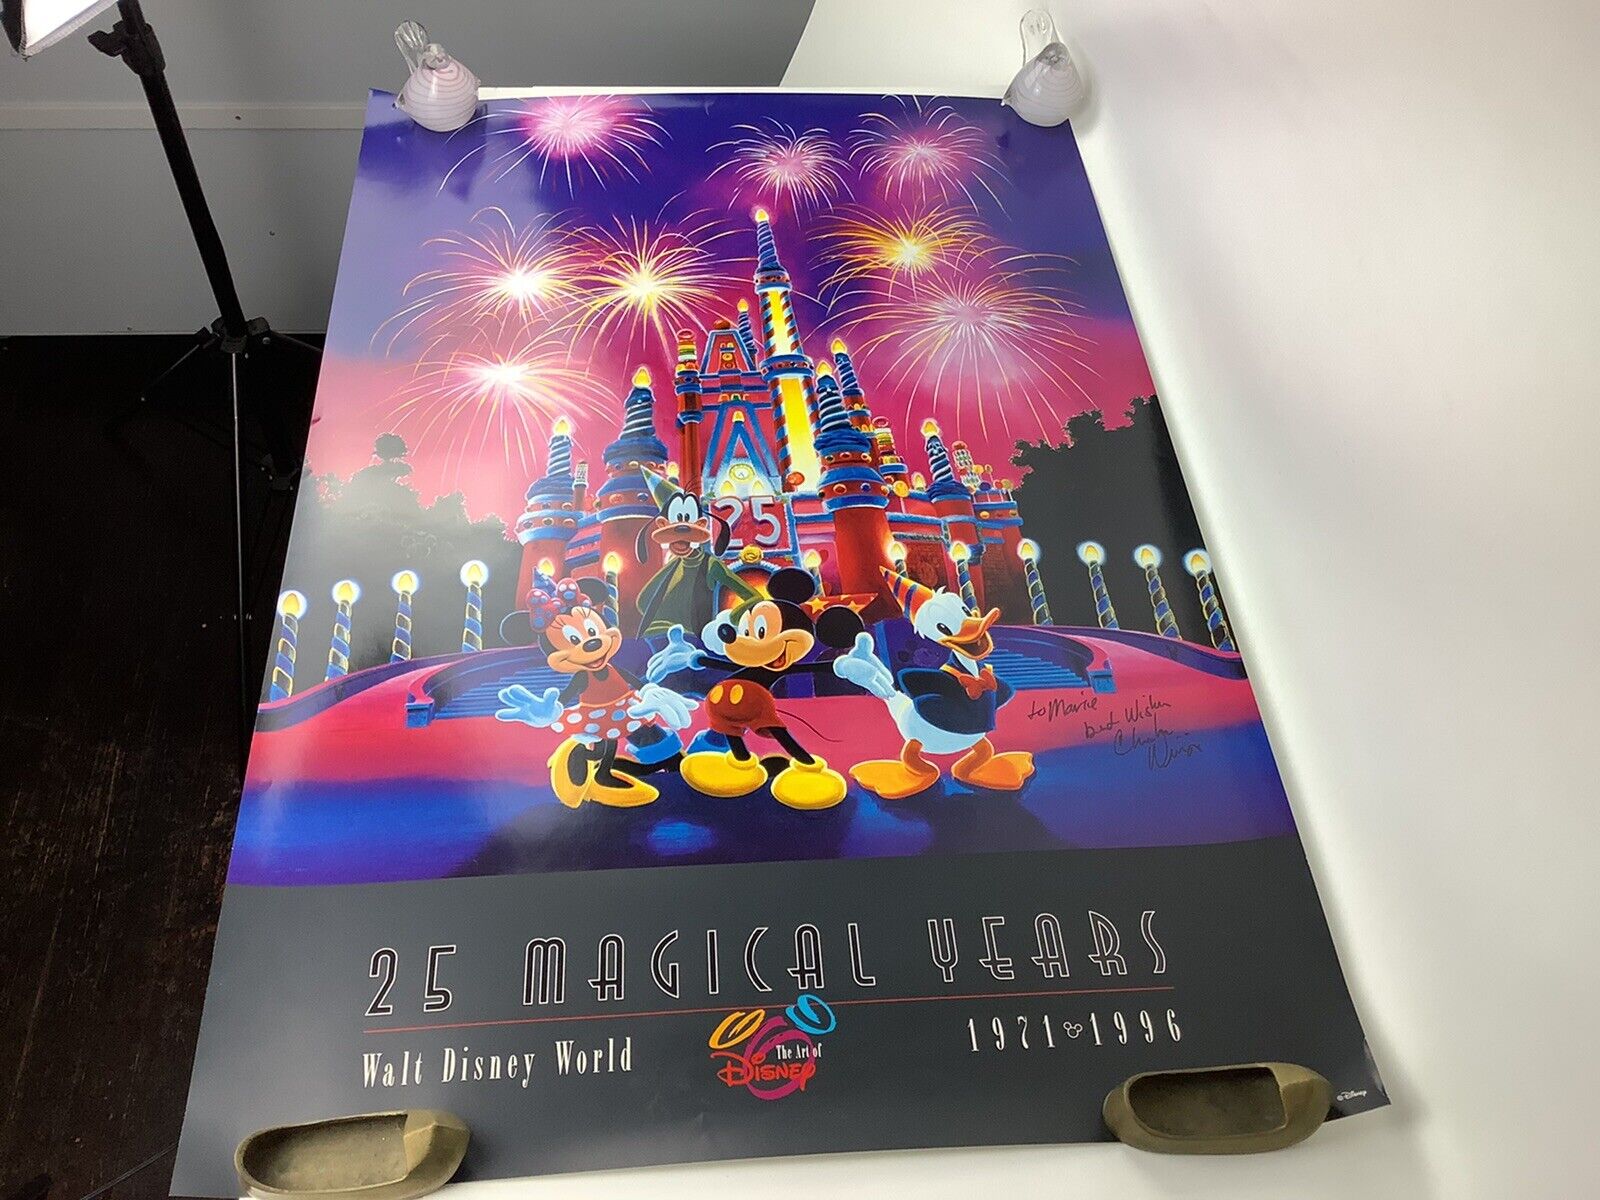 Walt Disney World Magic Kingdom 25 years poster 1971 - 1996 Hidden Map Signed￼